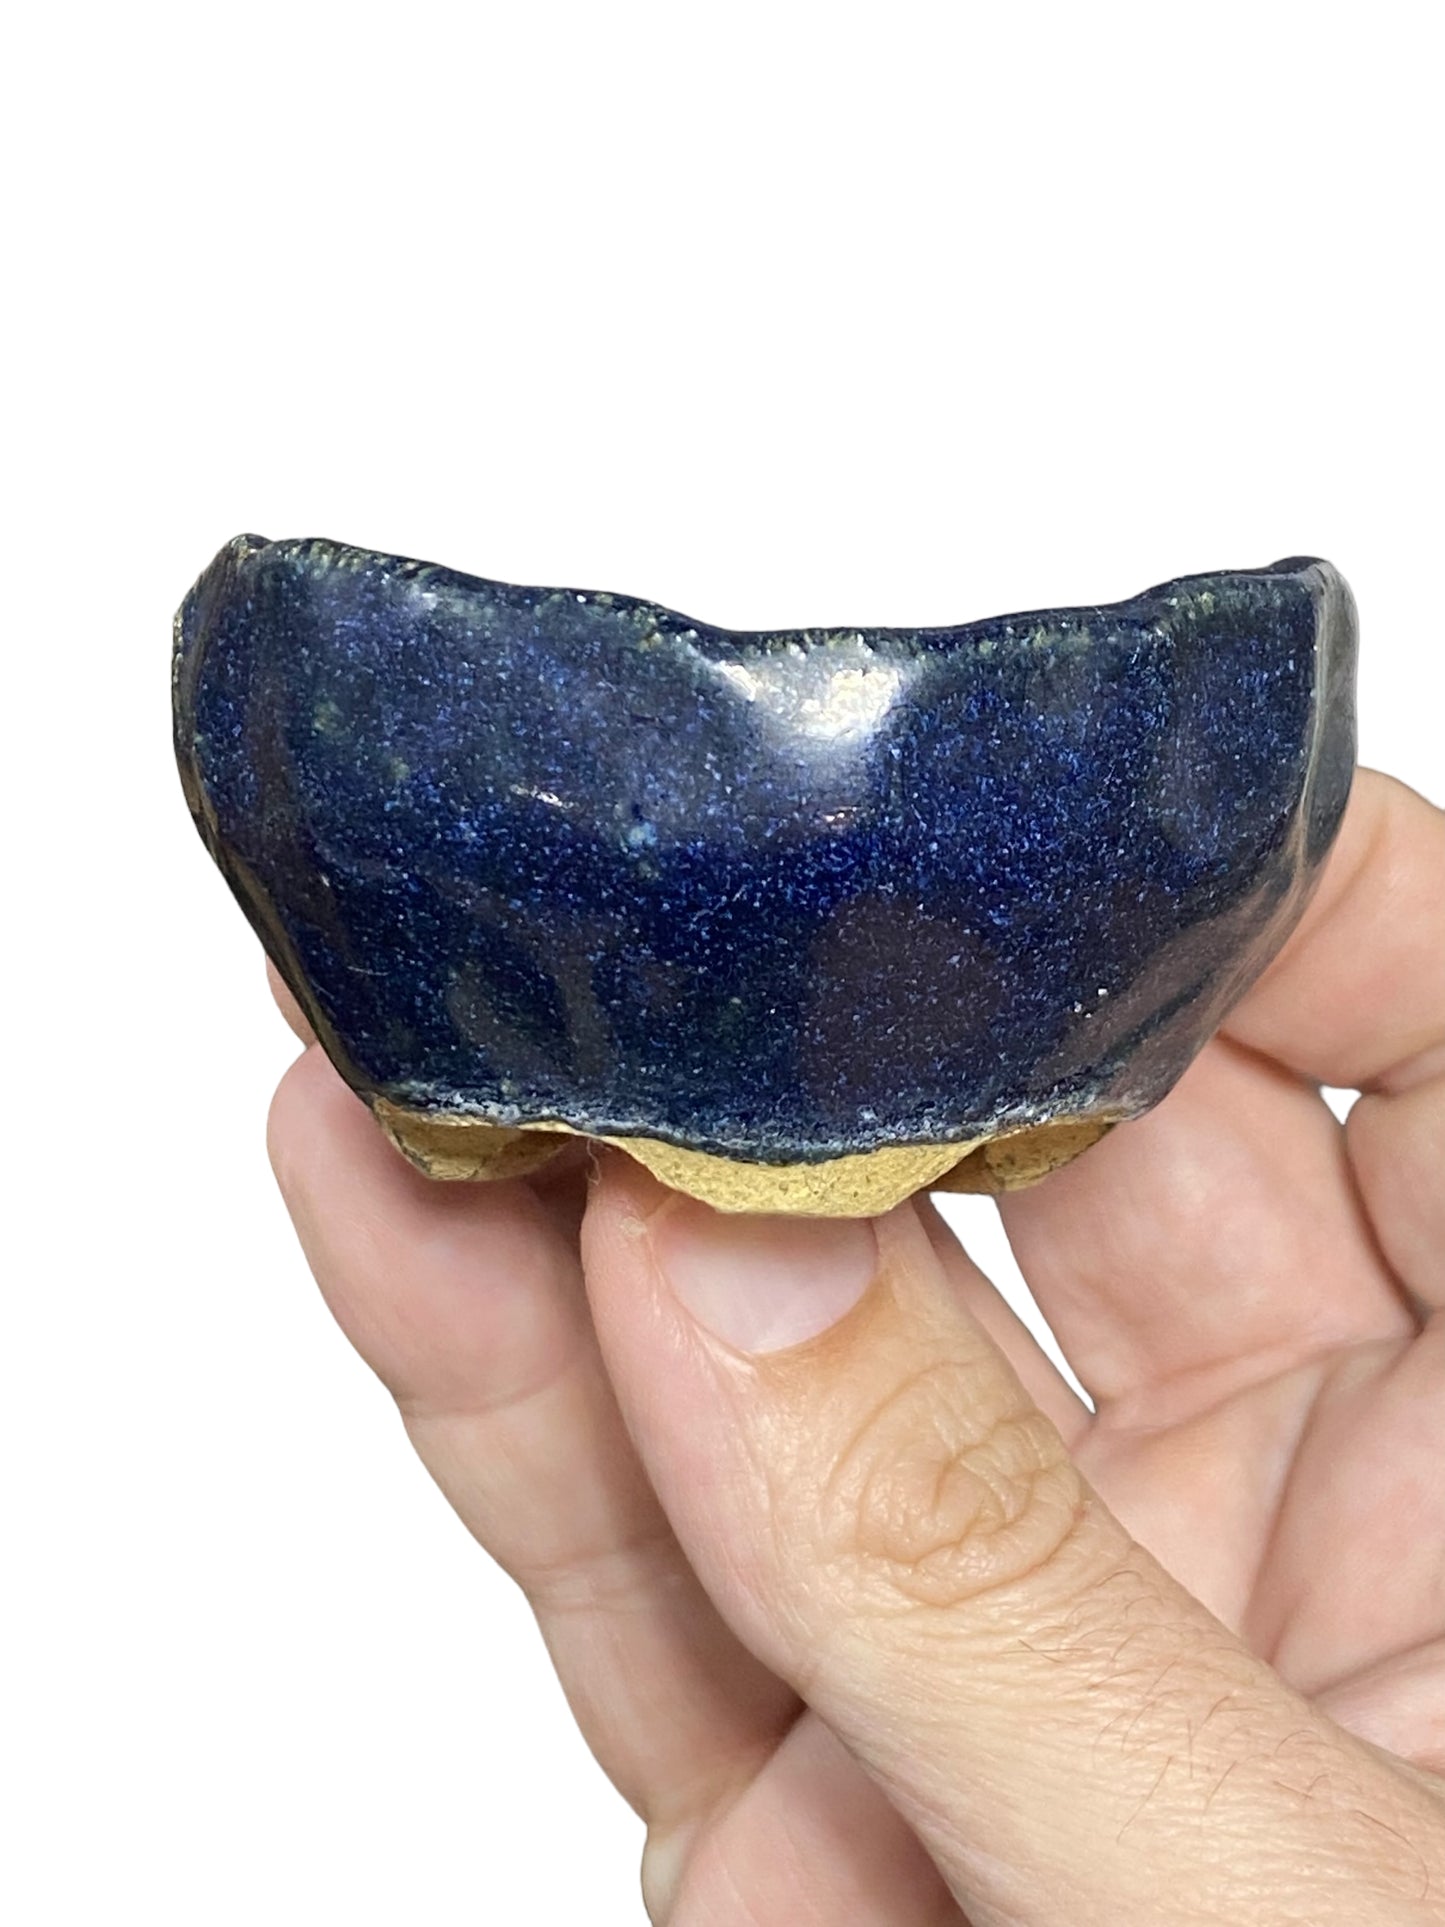 Housen - Ruri Blue Glazed Bowl Bonsai or Accent Pot